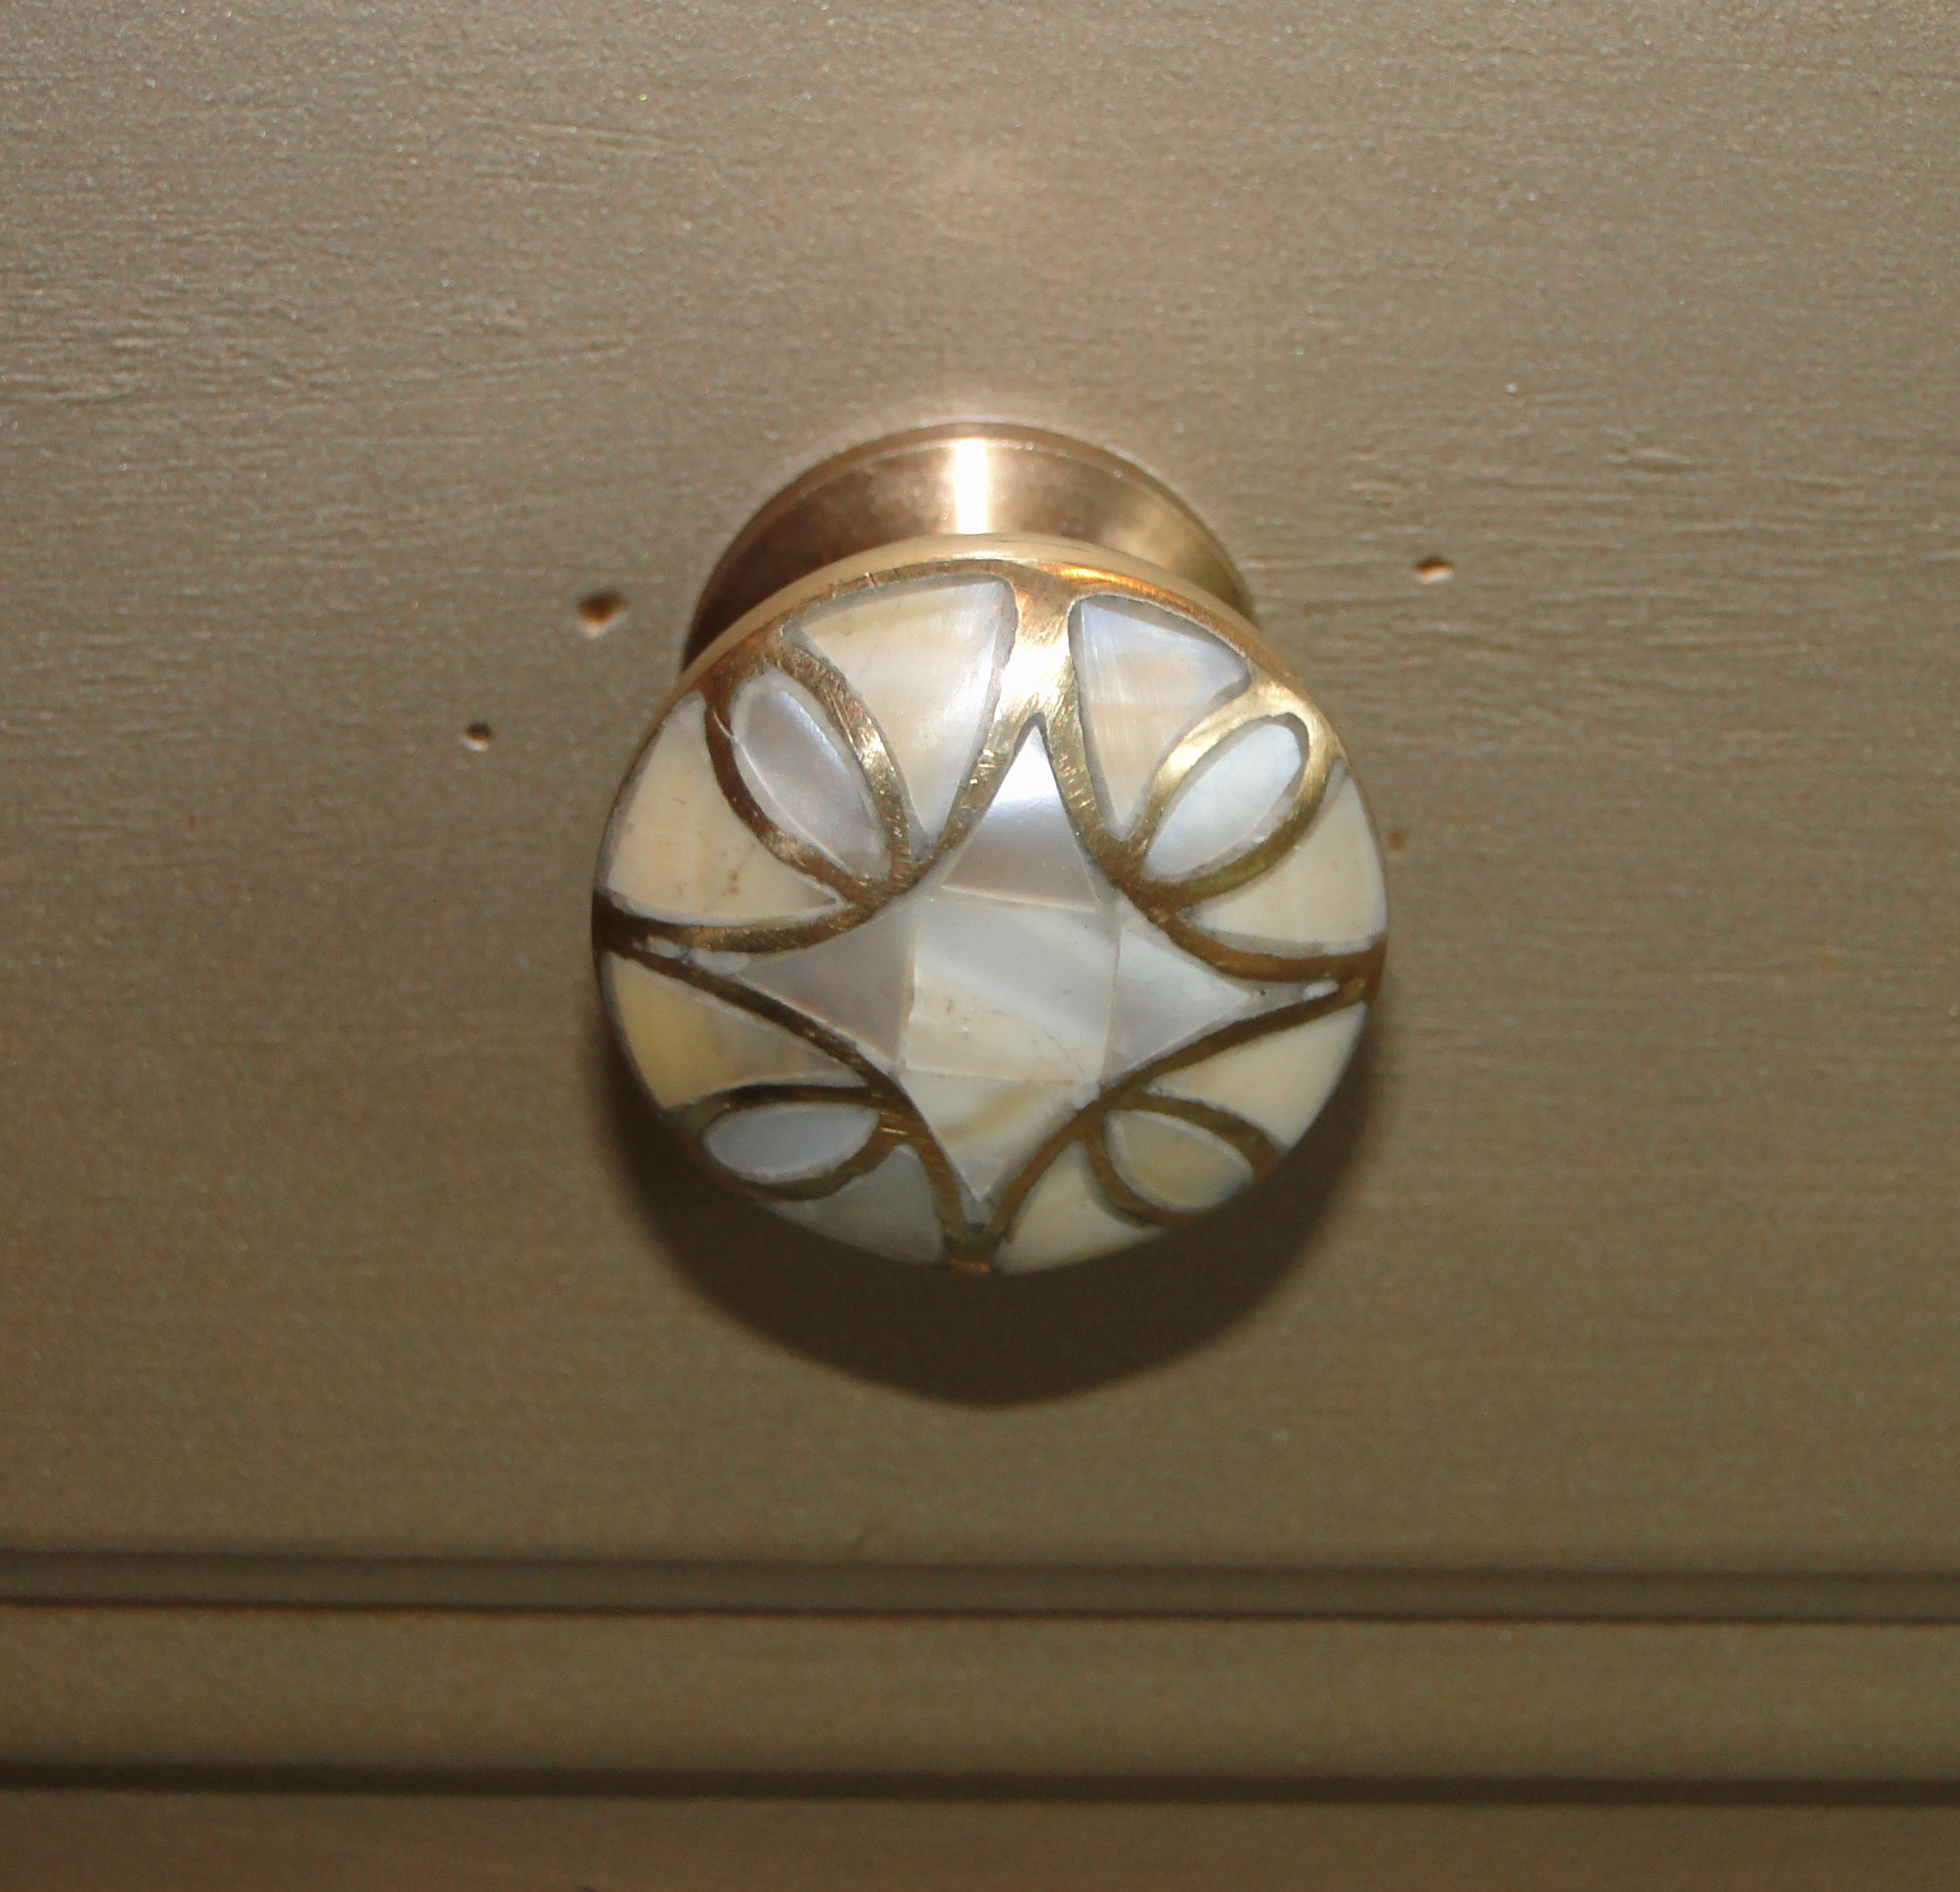 Stunning knob chosen for renewed piece